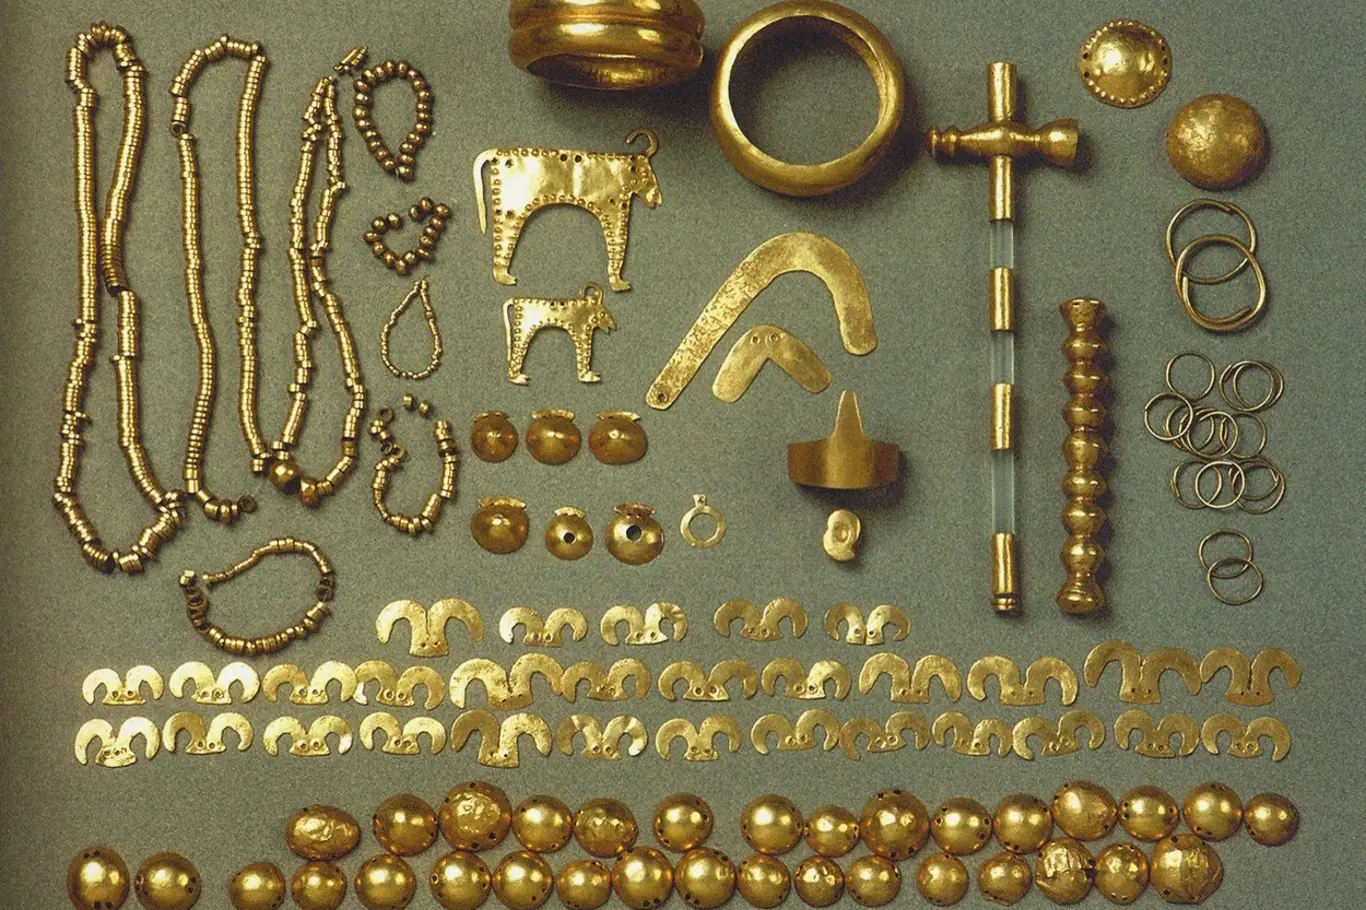 Zlatý poklad Varna